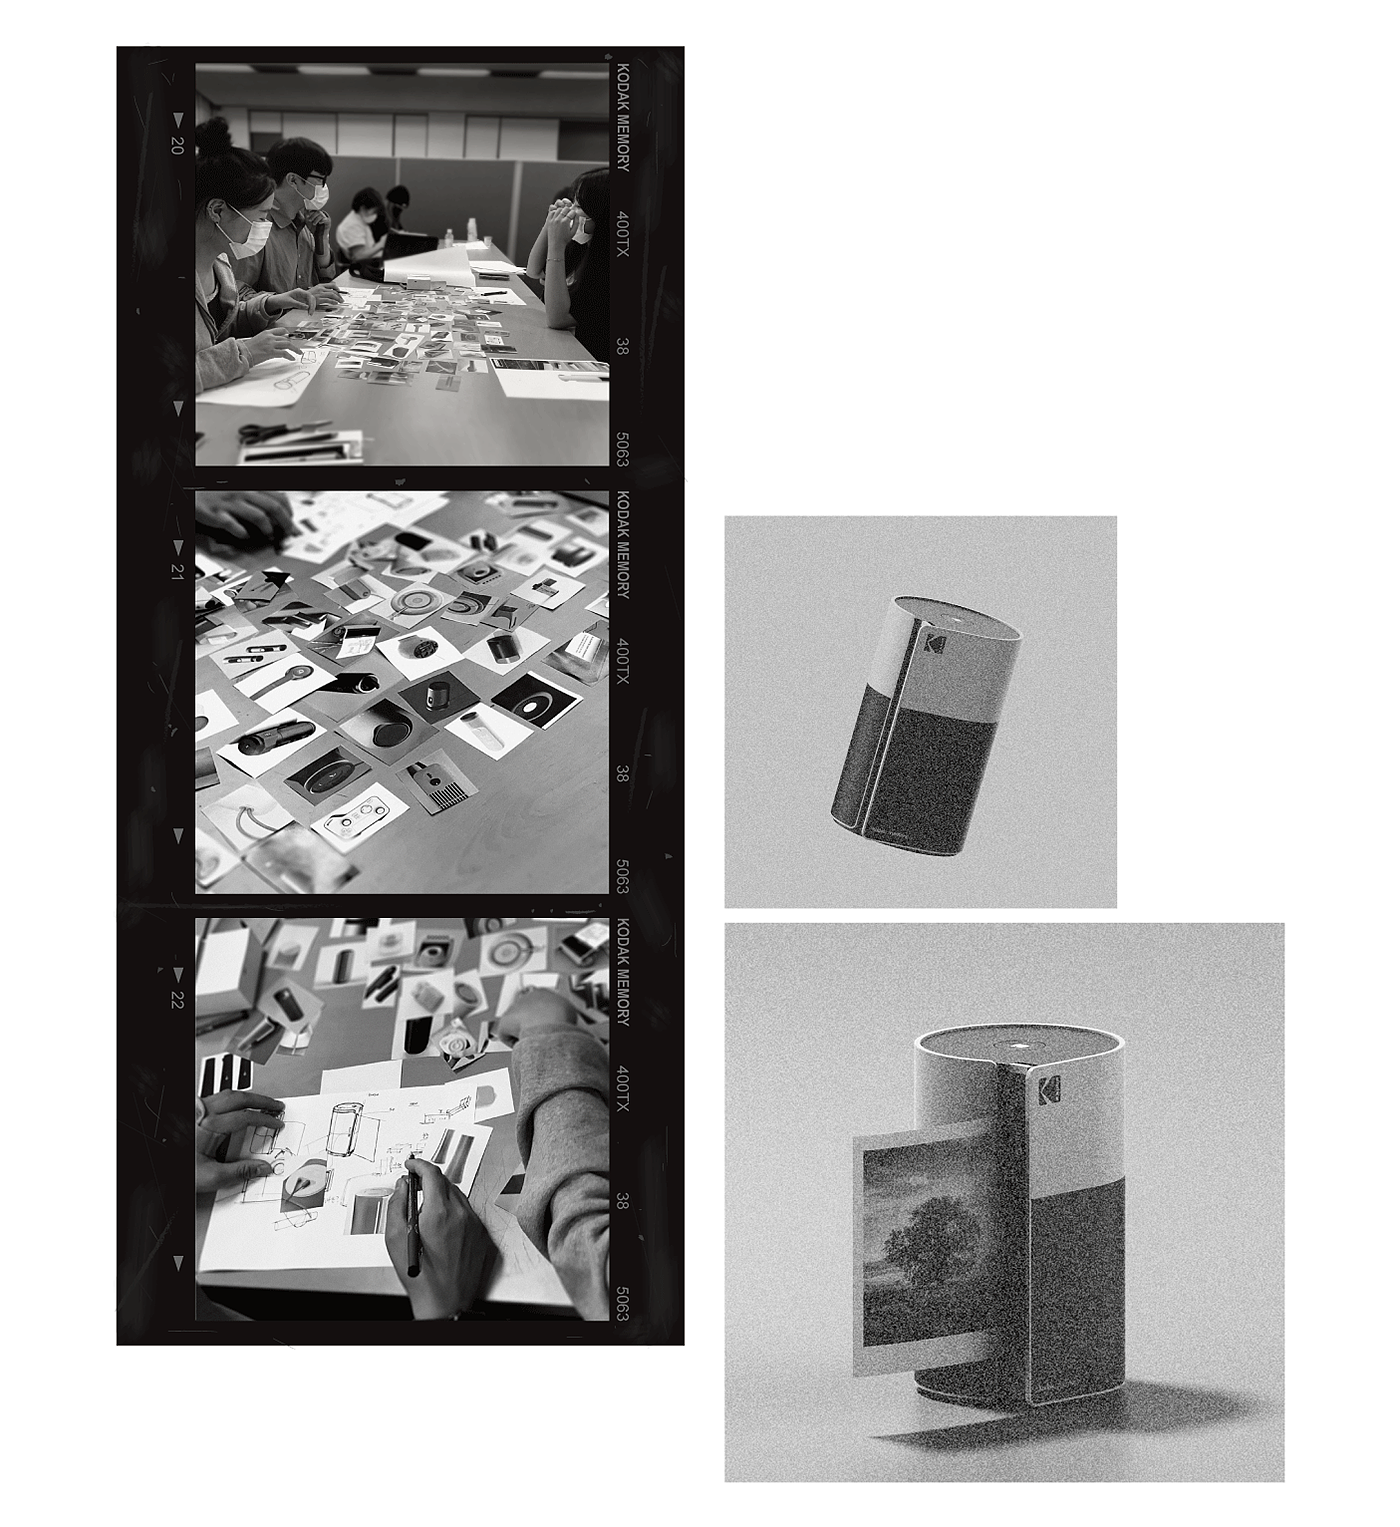 Kodak memory，热敏纸打印机，数码，柯达，